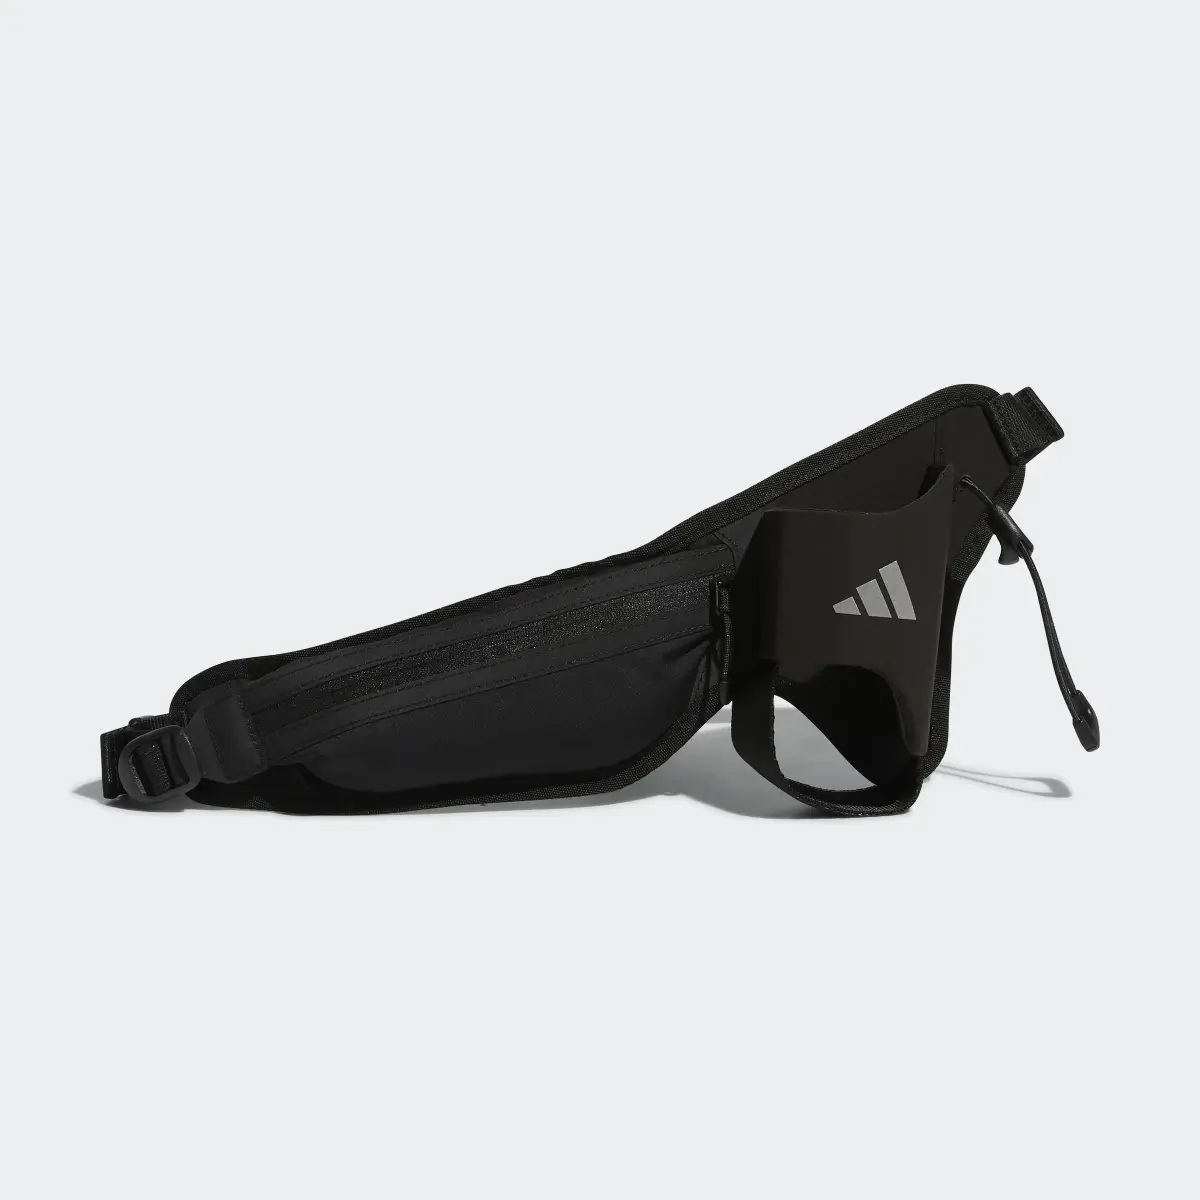 Adidas Running Bottle Bag. 2